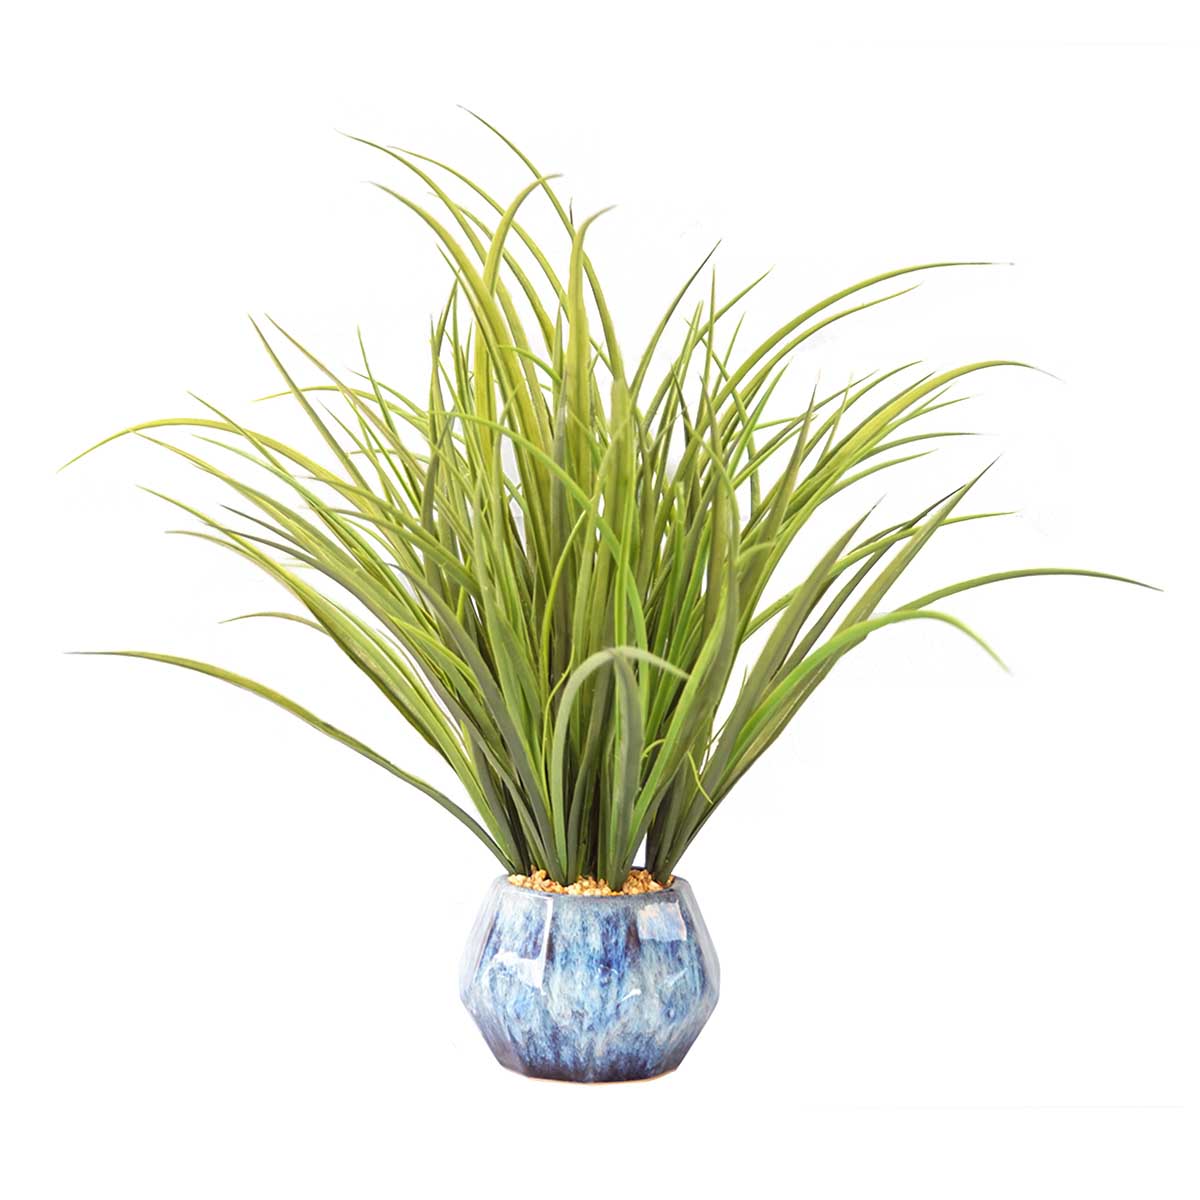 Vha102463 Plastic Grass & Onion Grass In Ceramic Pot